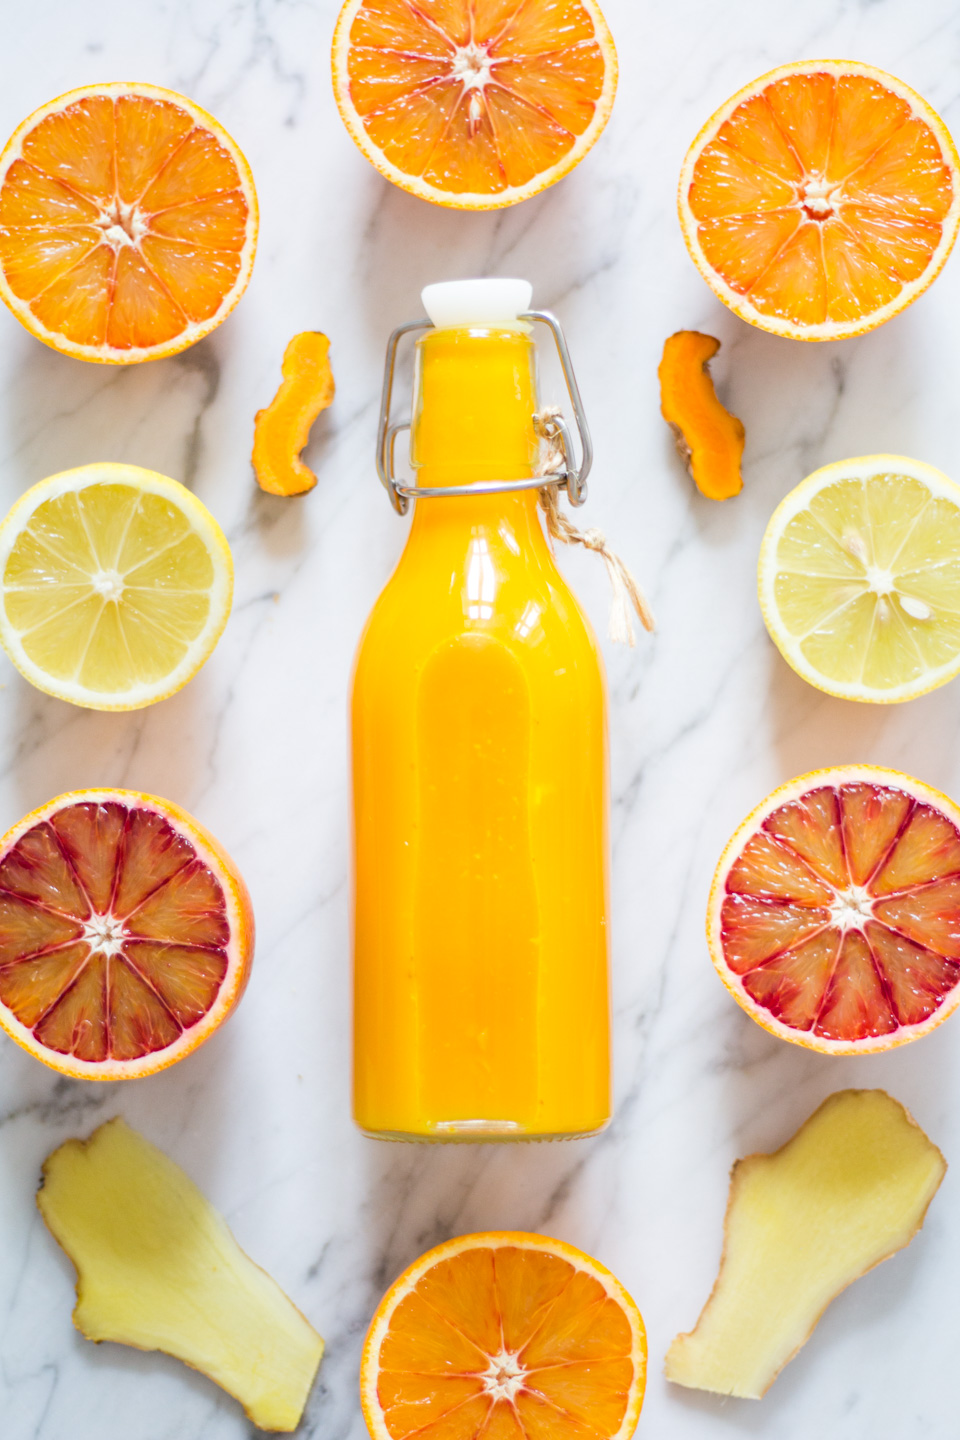 Lemon And Ginger Shot - A Healthy Wellness Shot Recipe